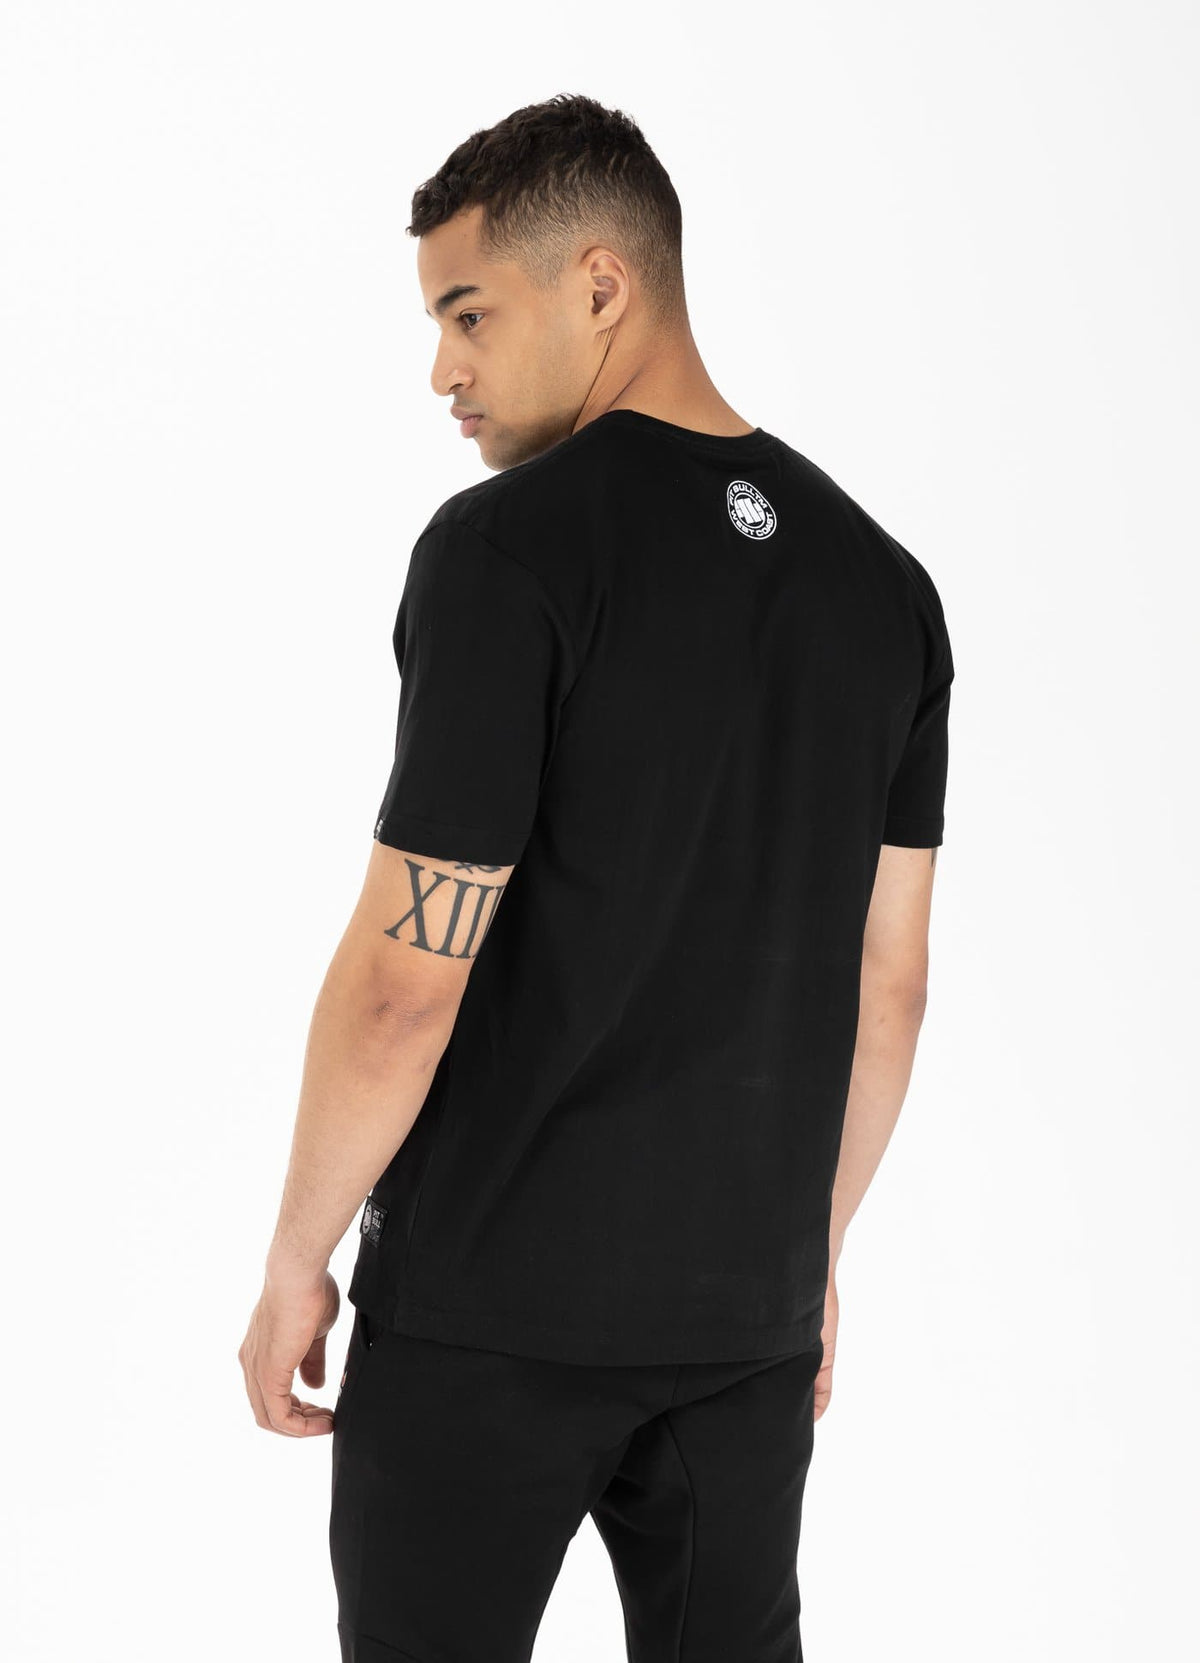 Official ADCC T-Shirt Black - Pitbull West Coast International Store 